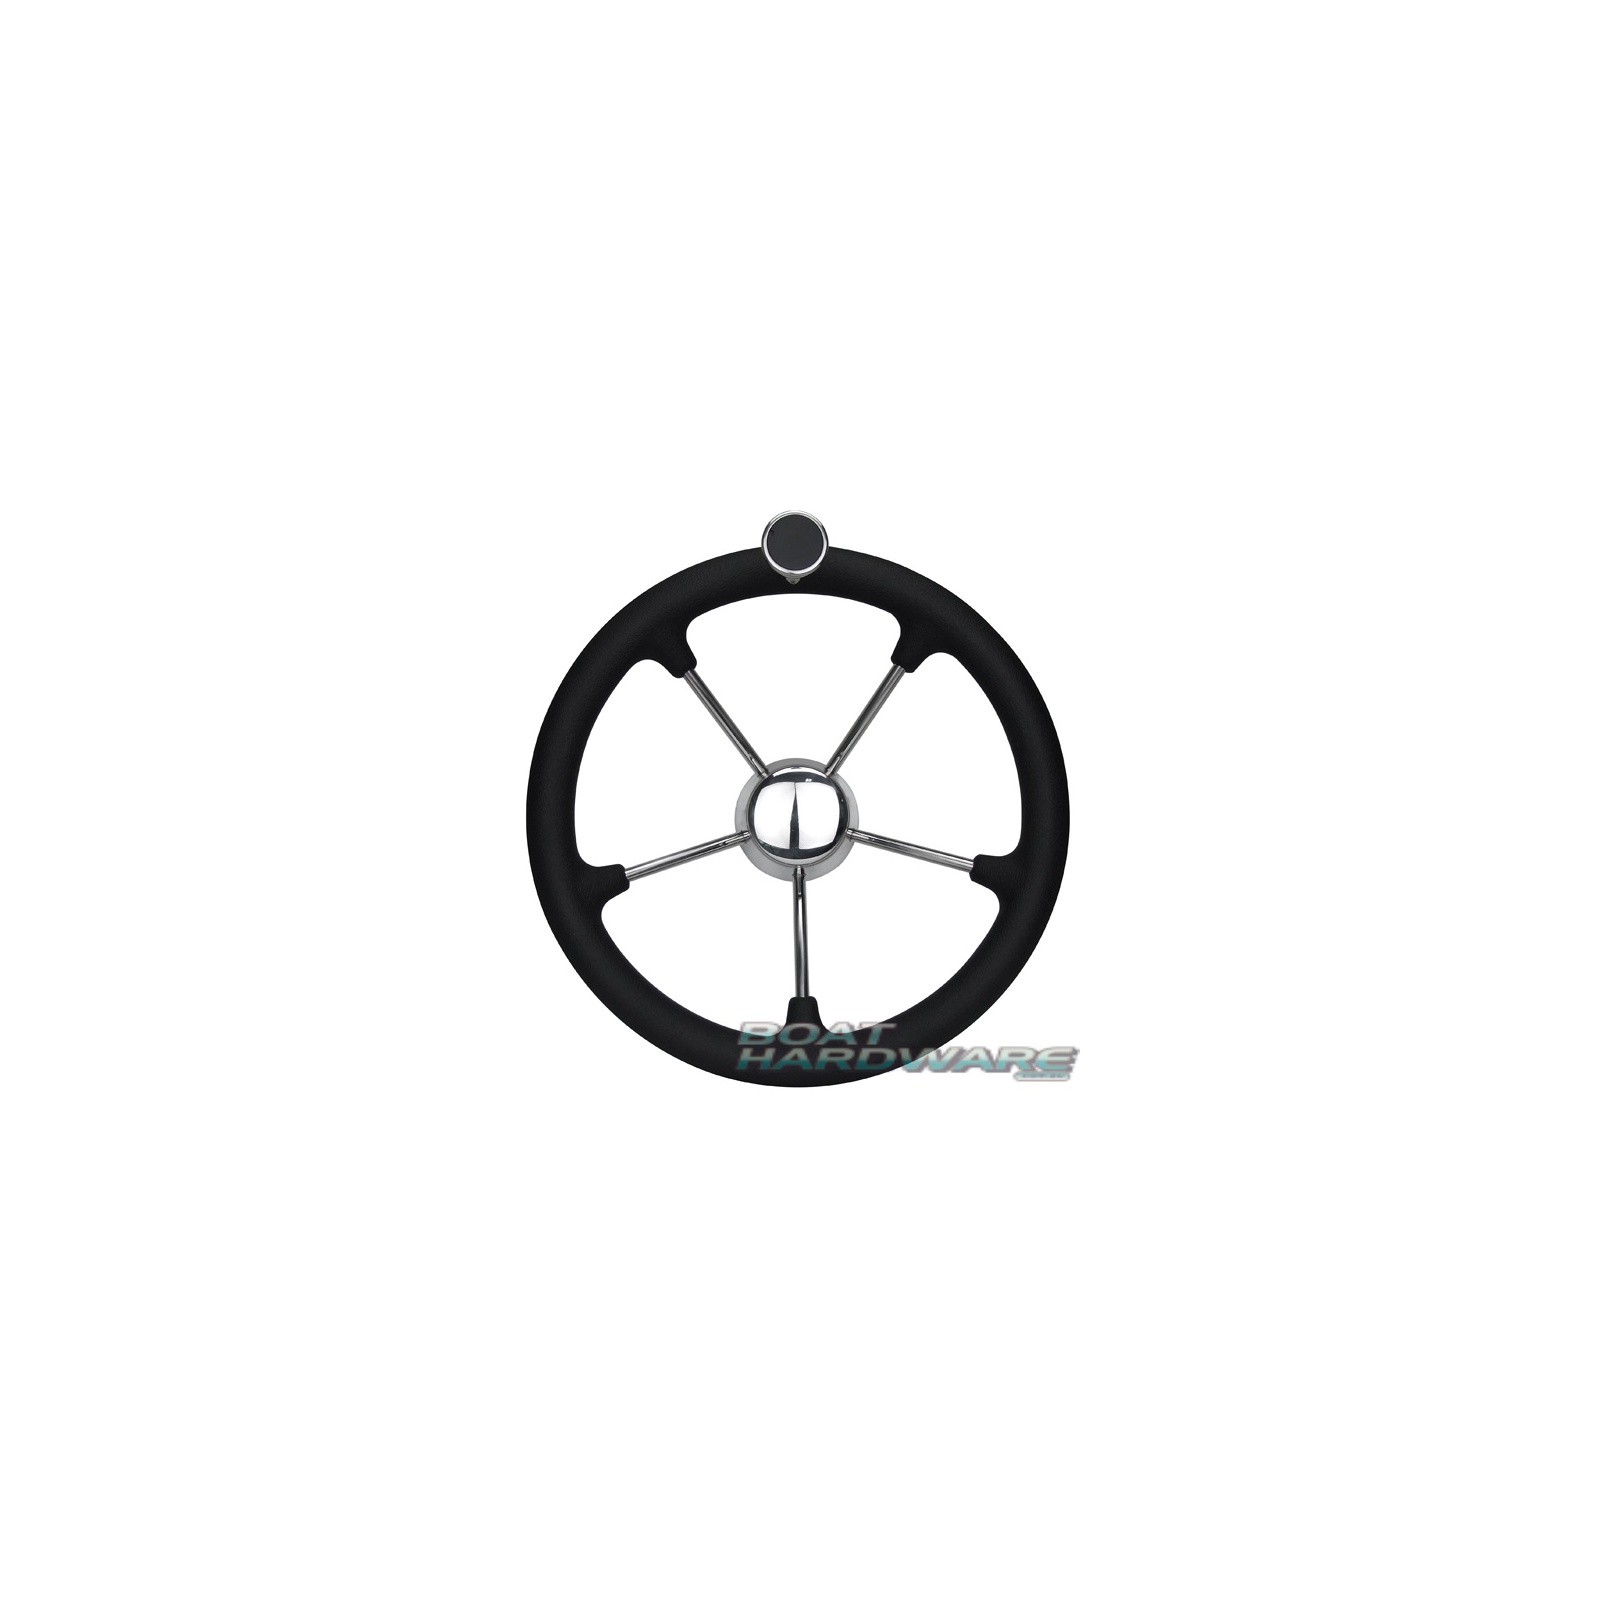 RELAXN® 350mm Stainless Steel Steering Wheel with Grip & Speed Knob